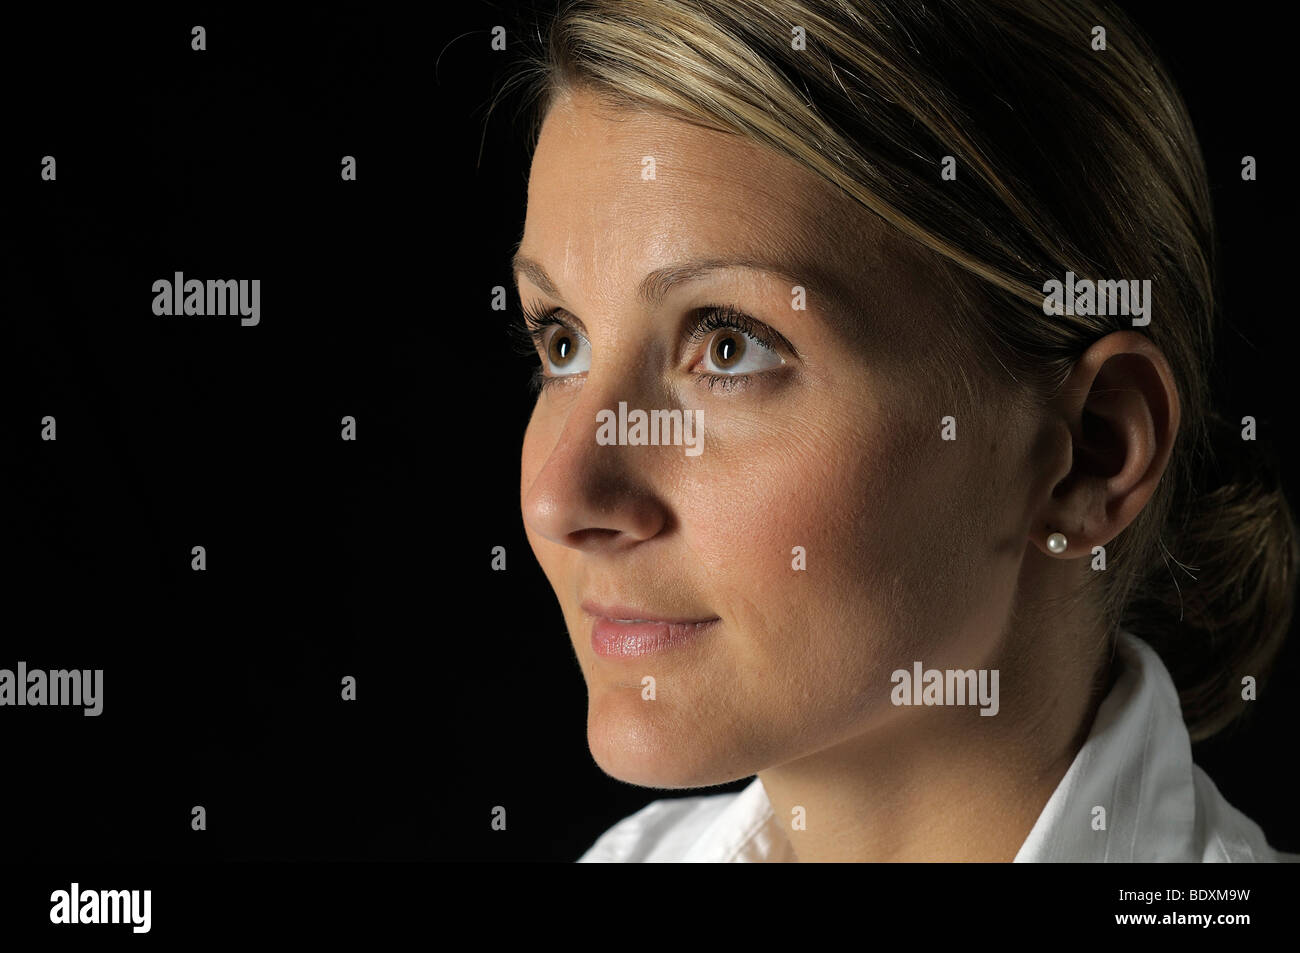 Woman's face, portrait, looking upwards Stock Photo